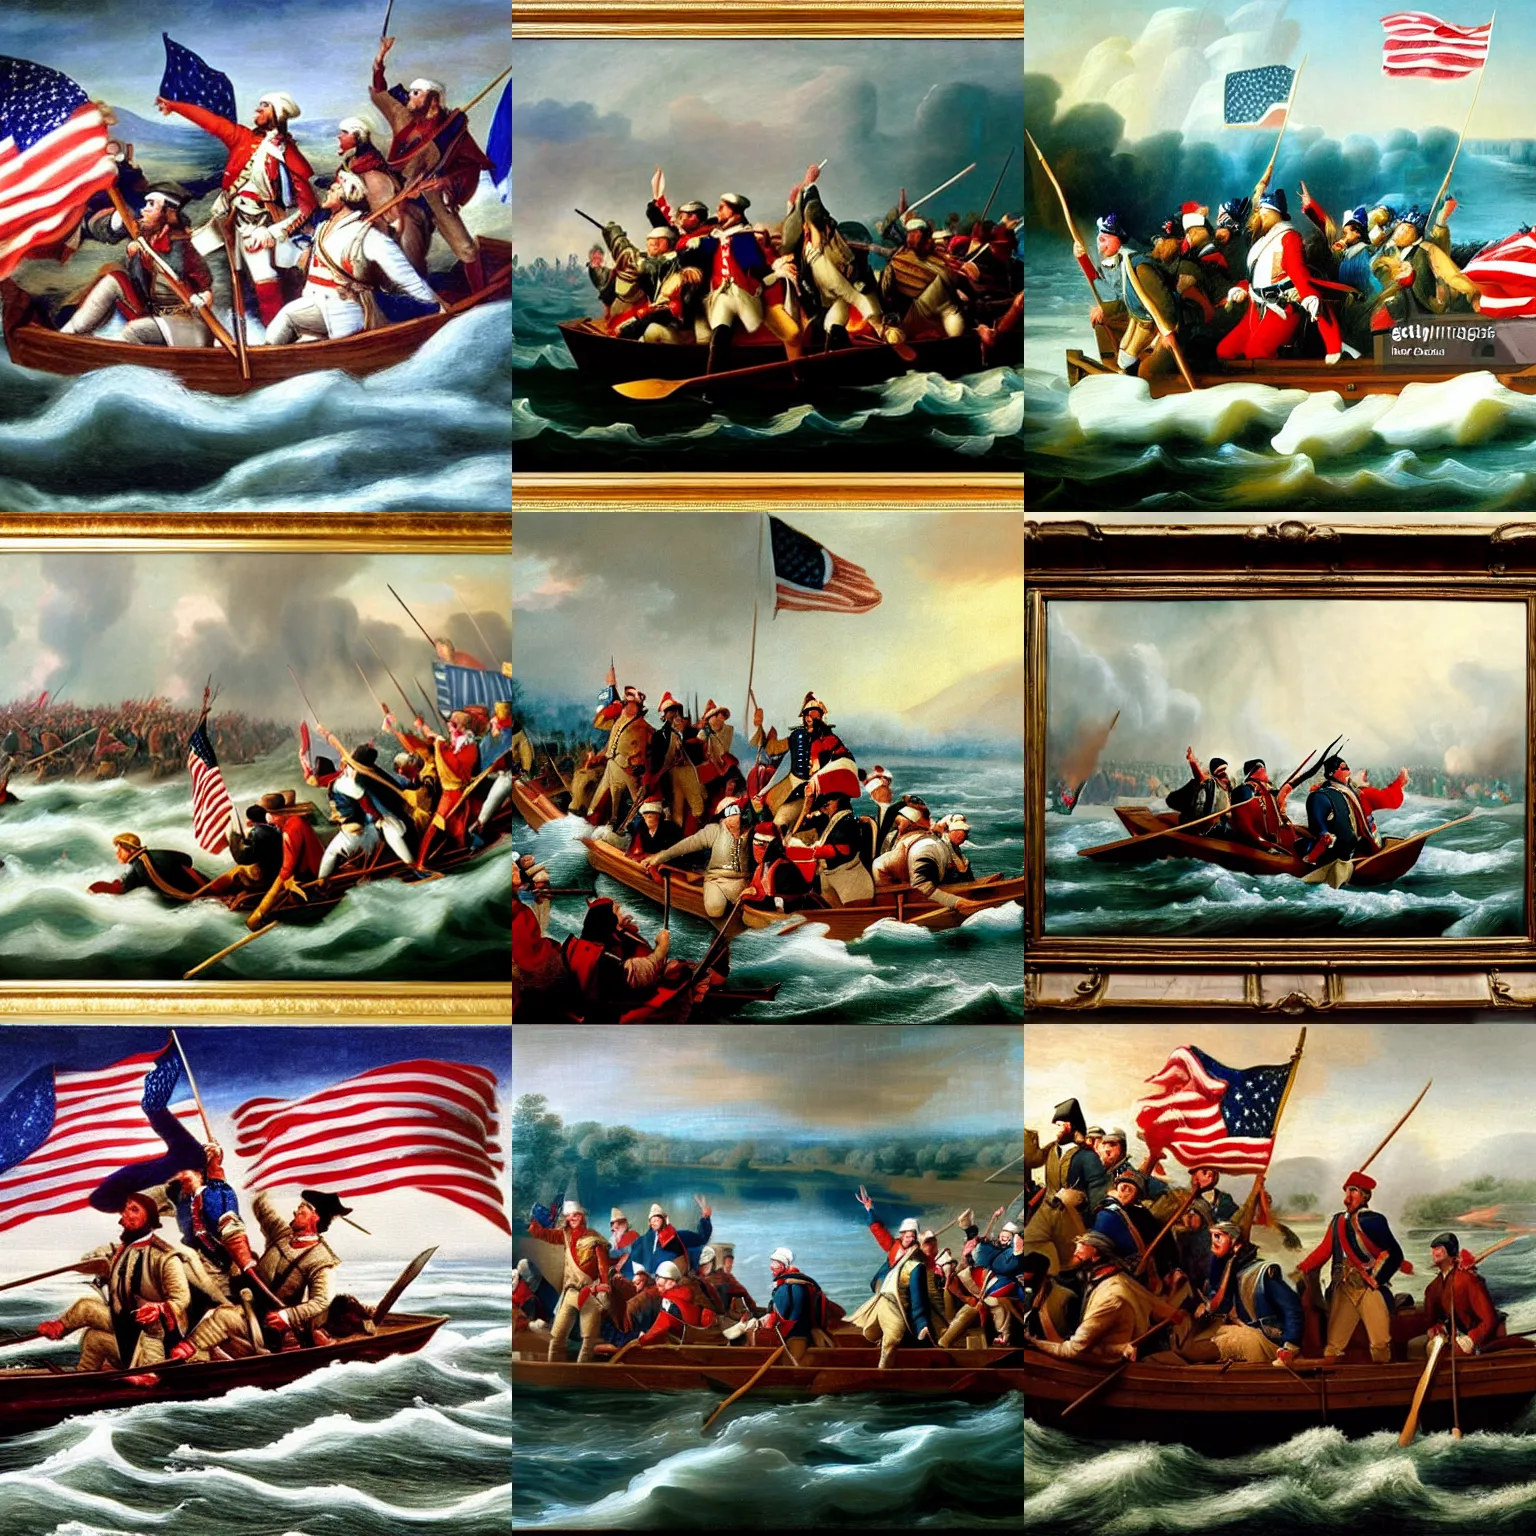 Prompt: Washington Crossing the Delaware, Dramatic Portrait Oil on Canvas, Heroic Patriotic Godd Bless America